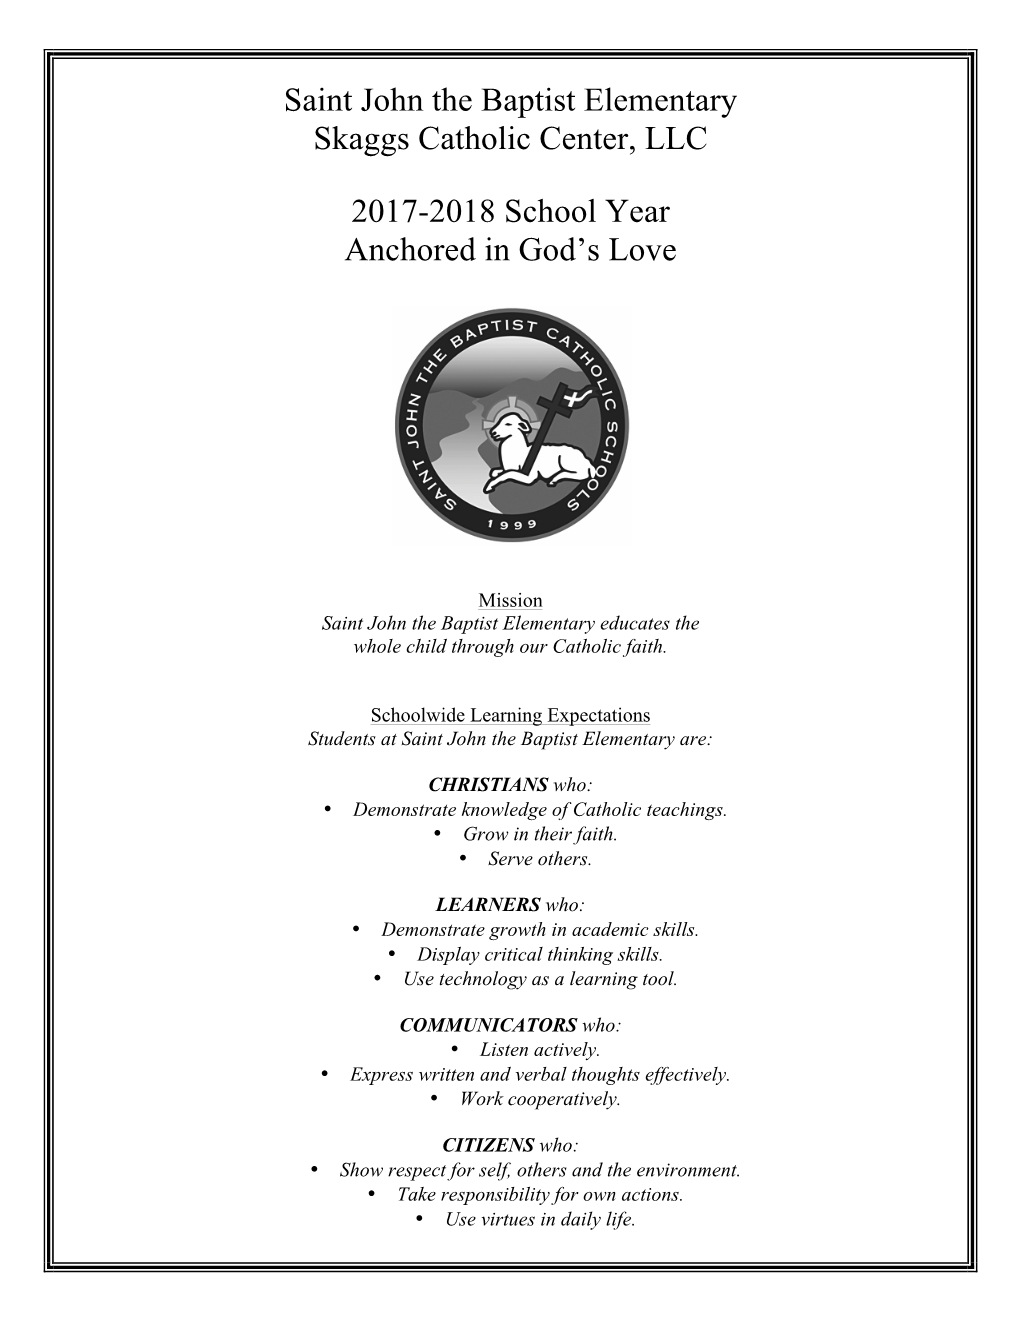 Saint John the Baptist Elementary Skaggs Catholic Center, LLC 2017-2018 School Year